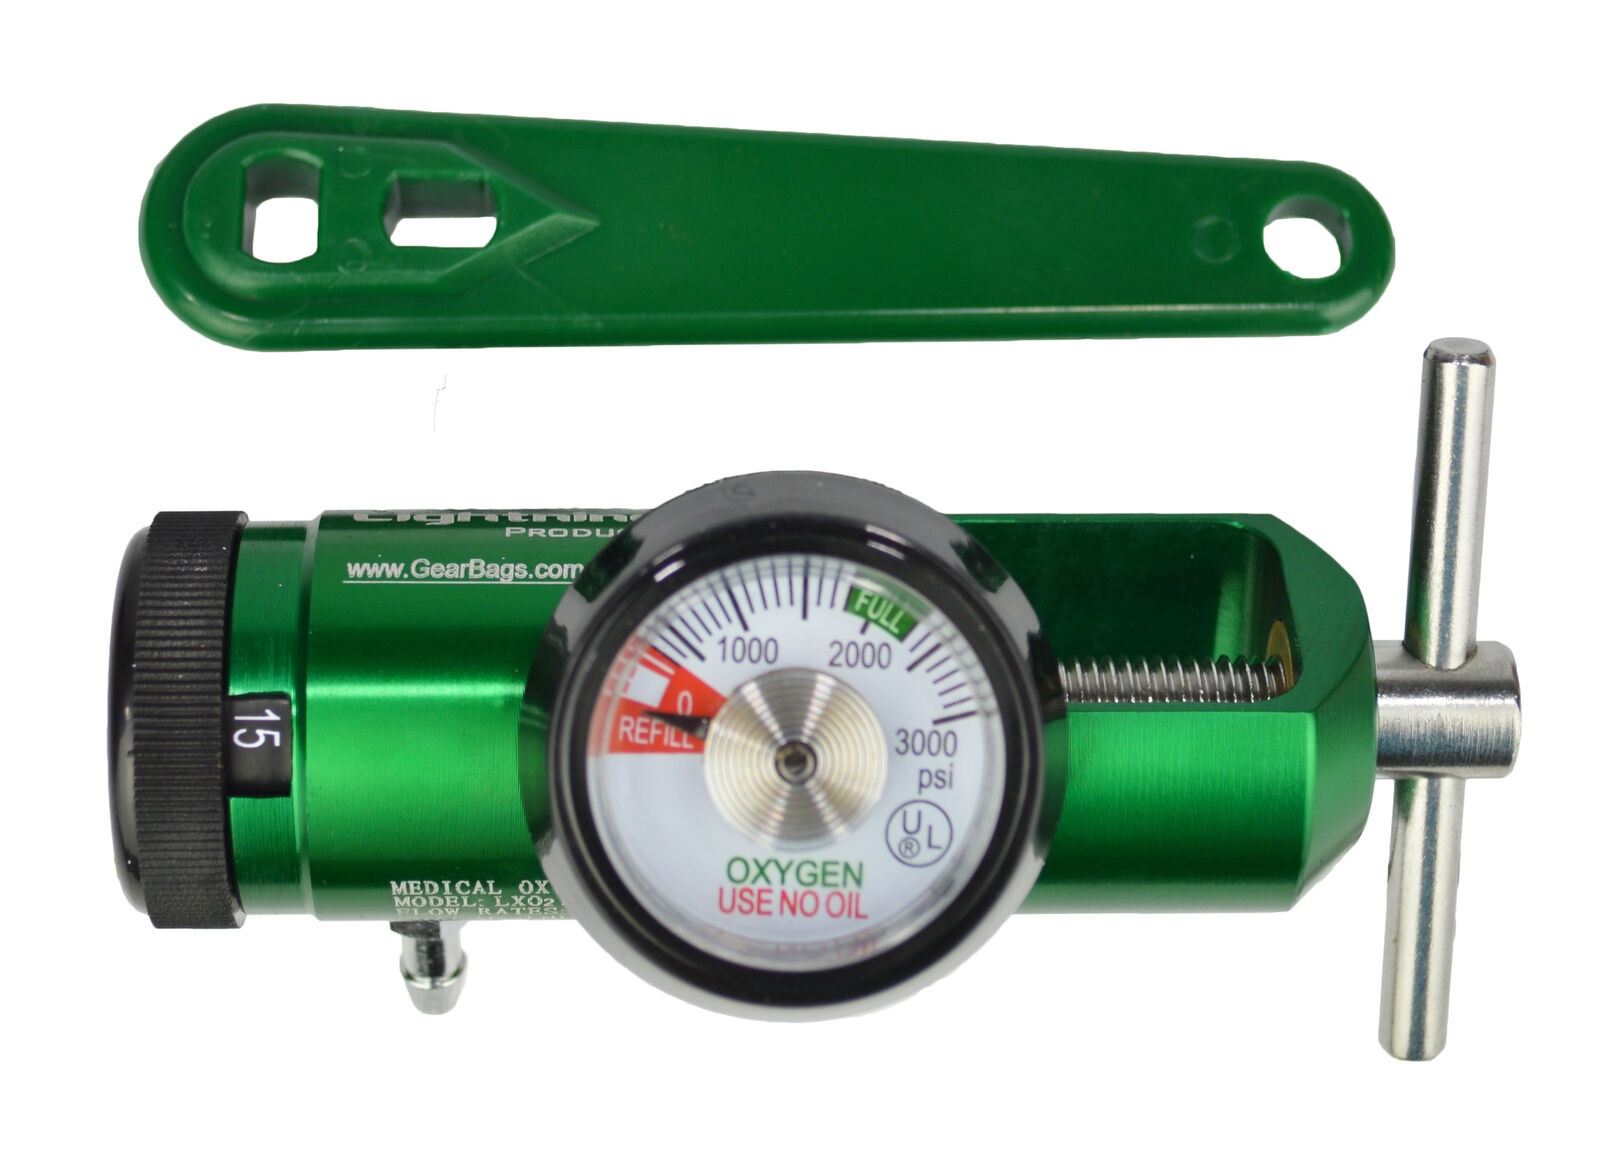 Lightning X O2 Mini Oxygen Regulator CGA-870 Gauge Flow Rate 0-15lpm w/Wrench